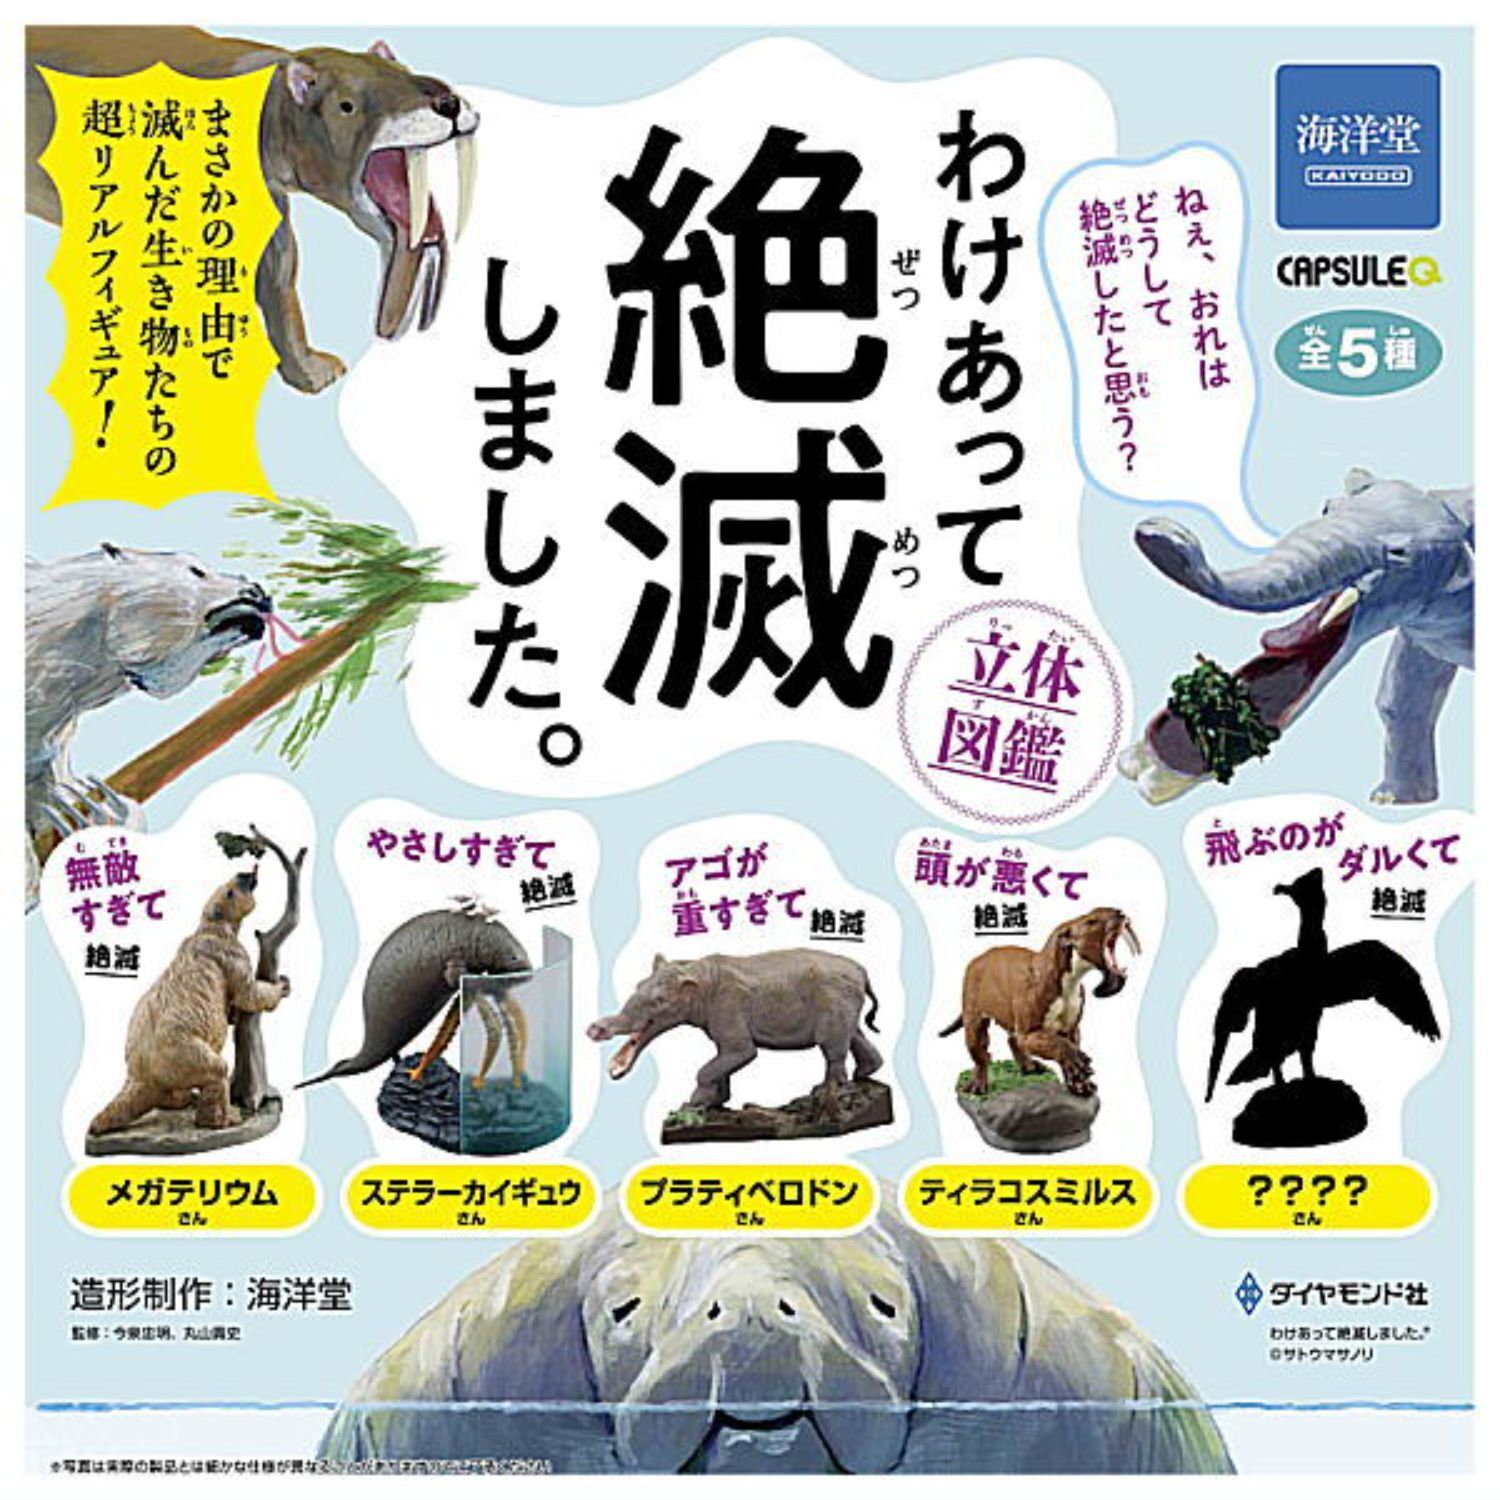 Extinct Animal Mascot Capsule Toy 5 Types Full Comp Set Gacha New Japan